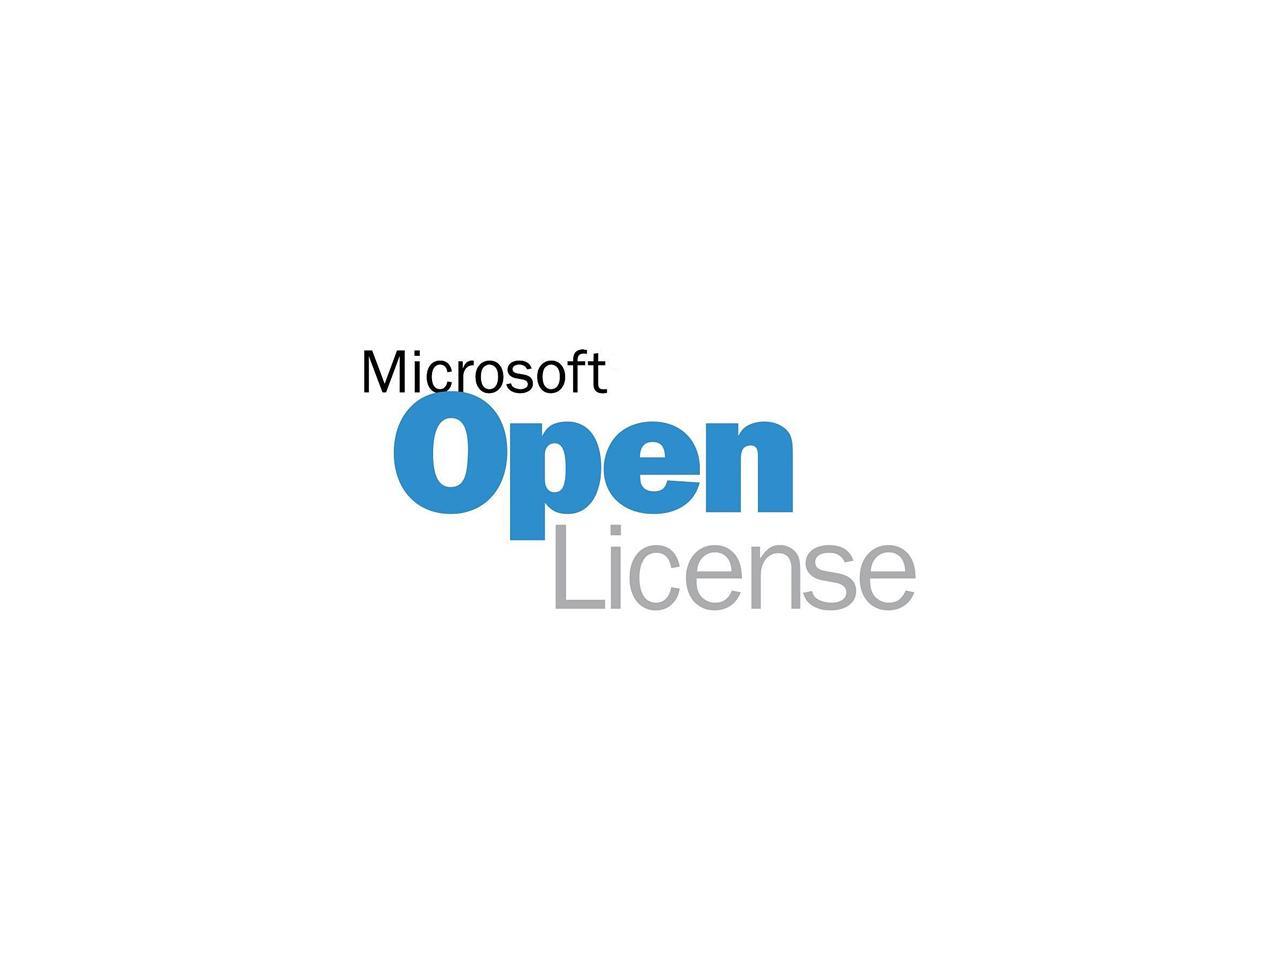 microsoft office for mac 2011 single license